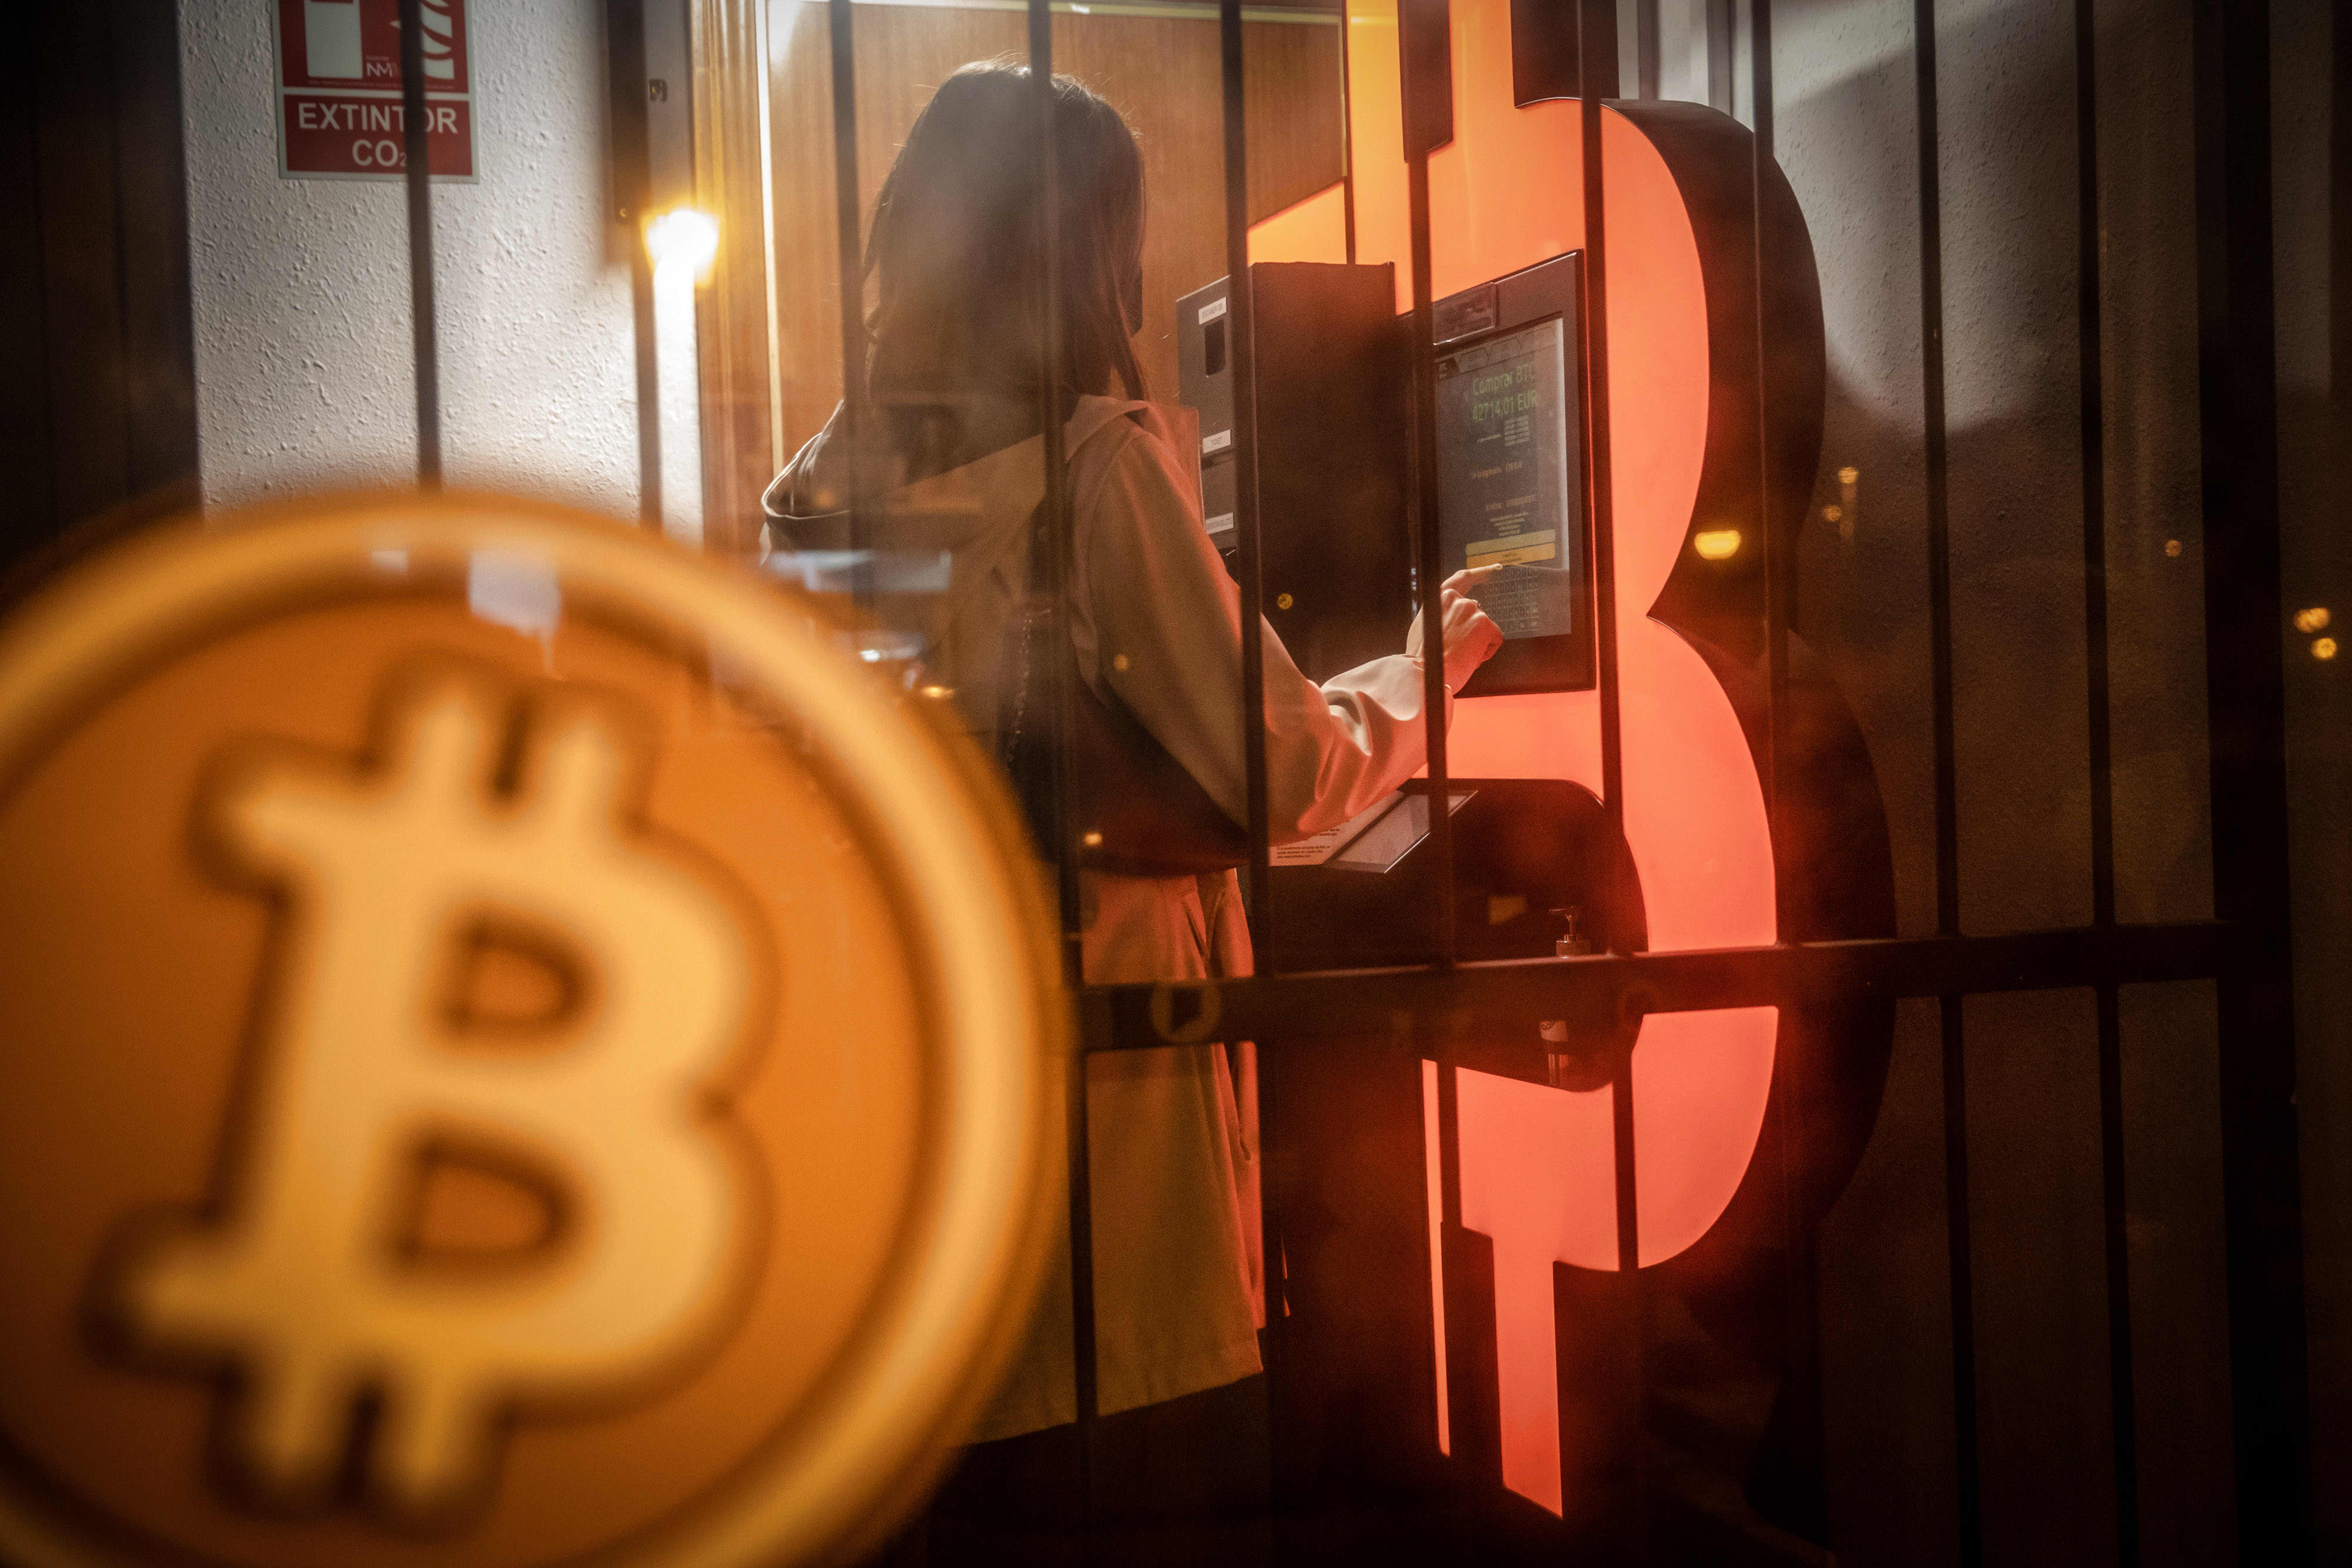 Bitcoin (BTC) is at a “peak”, says Citi